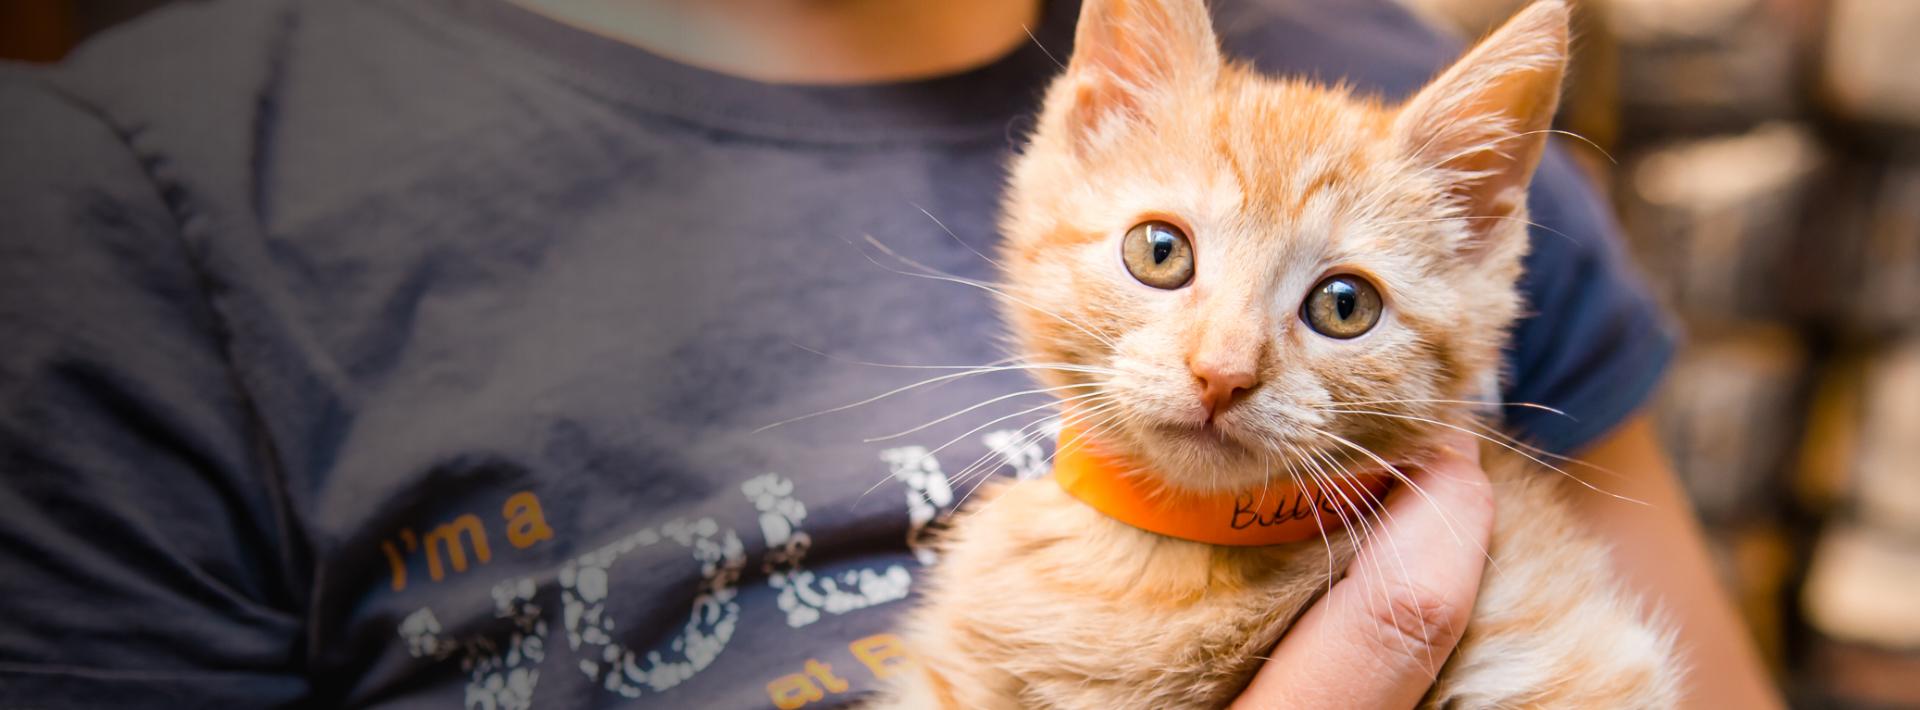 Person wearing a gray shirt holding an orange tabby kitten wearing an orange collar